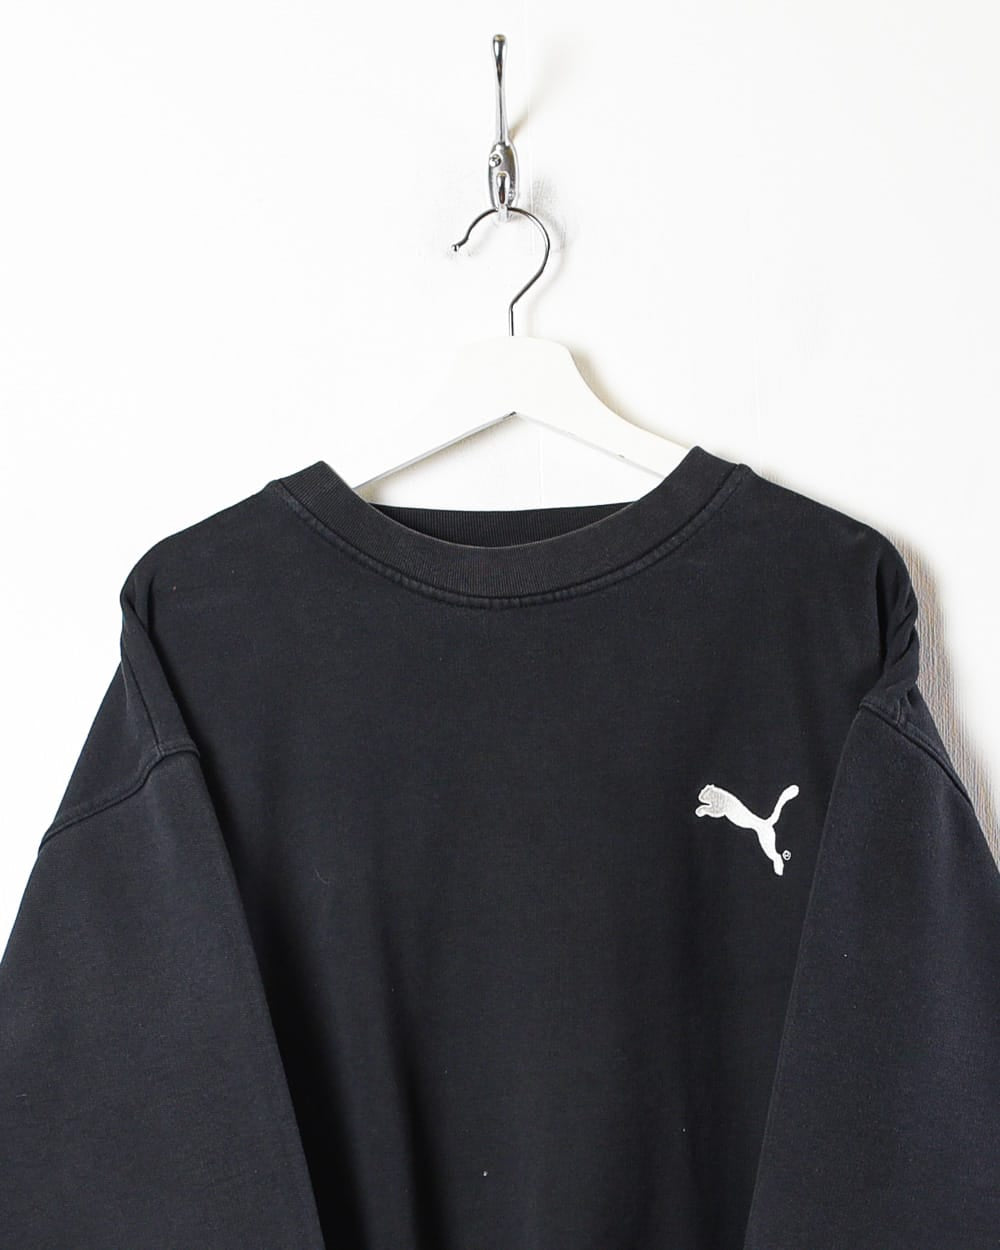 Black Puma Sweatshirt - Medium